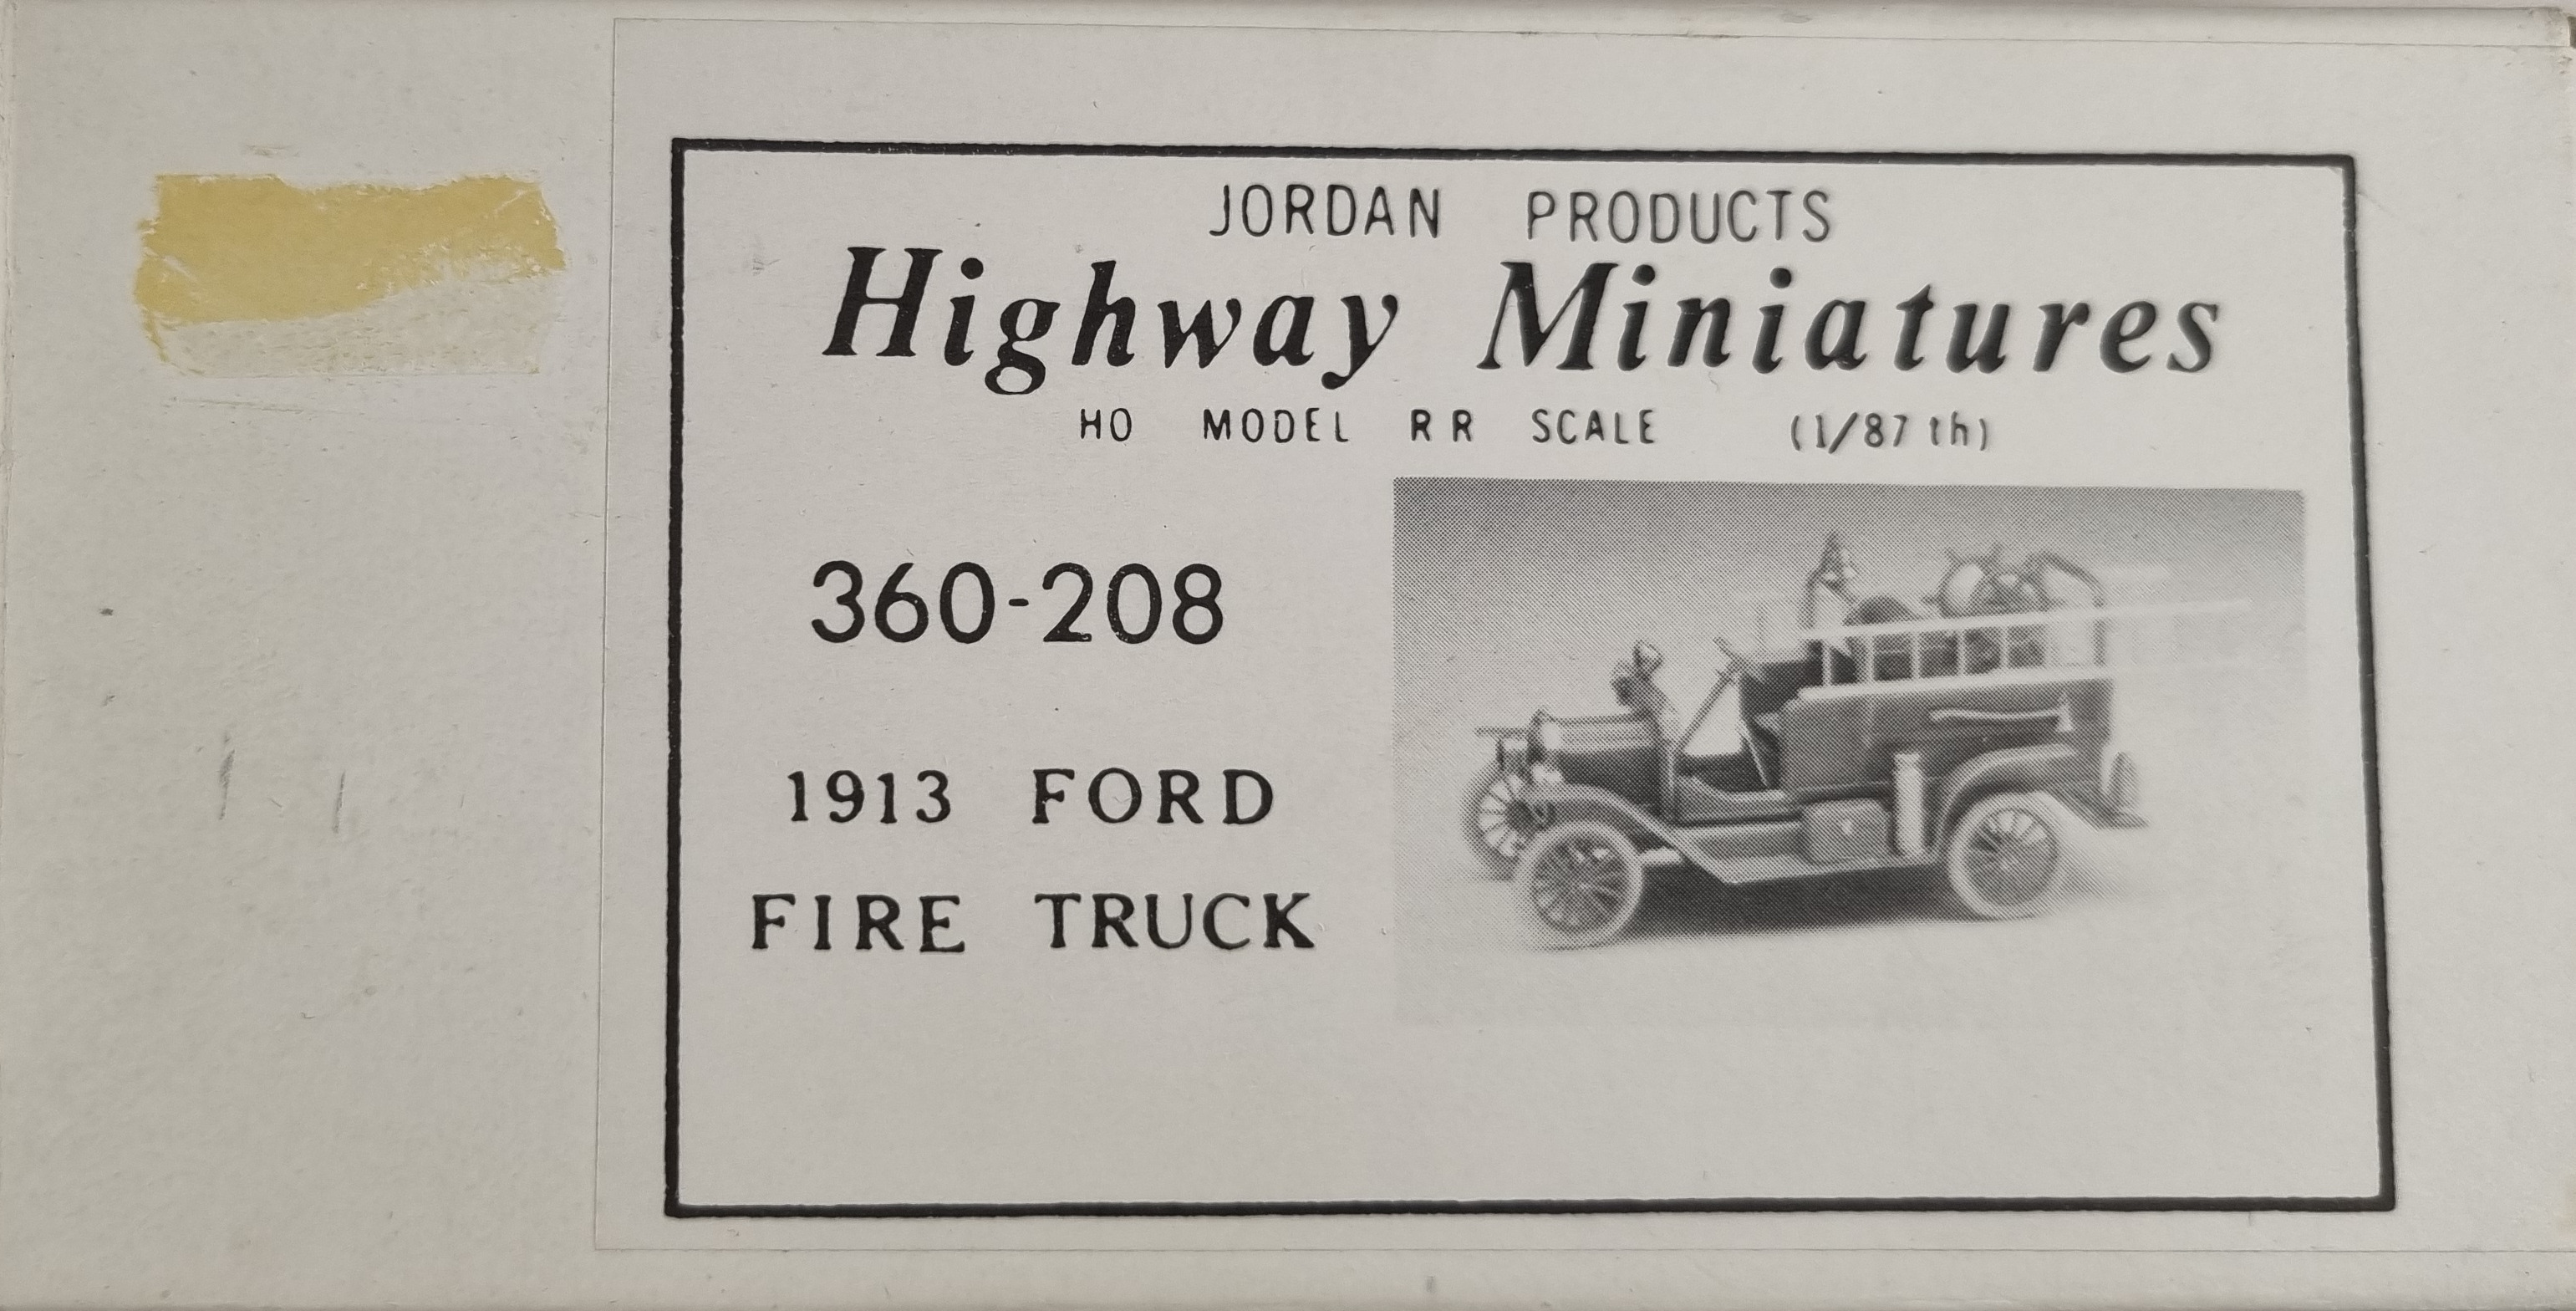 Highway Miniatures 360-208, Brandbil, Skala H0